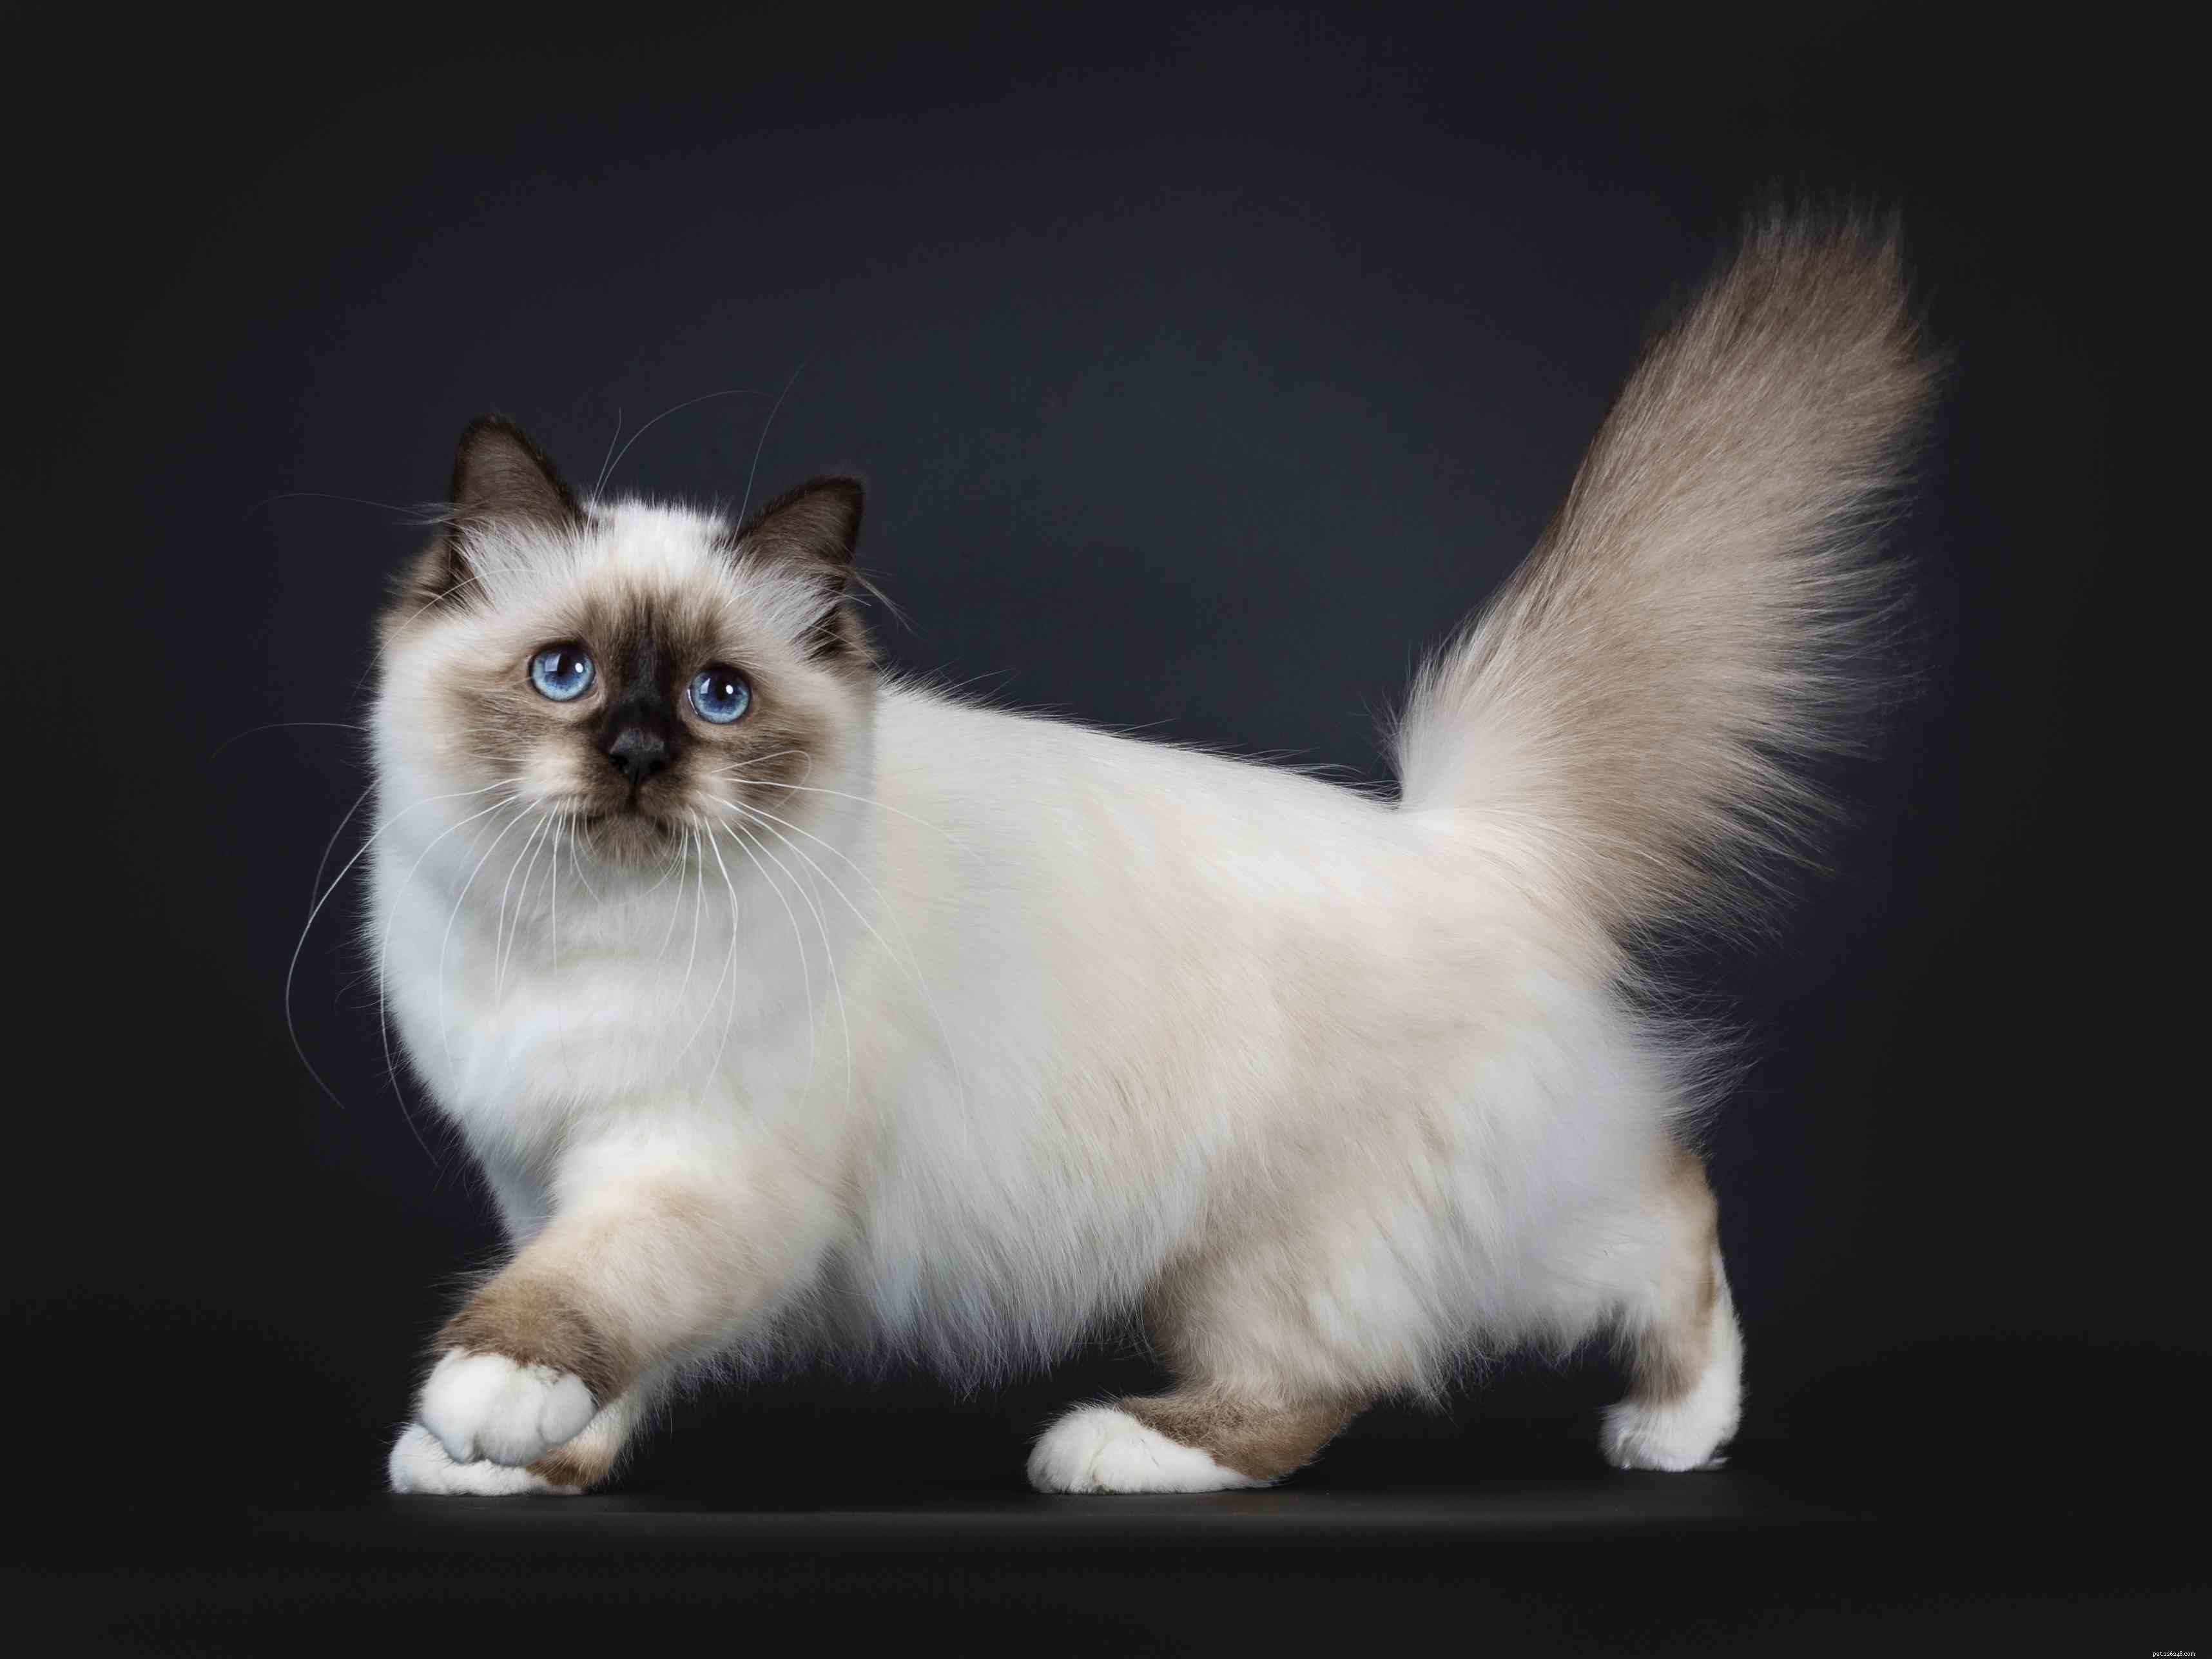 Бирман:профиль породы кошек, характеристики и уход